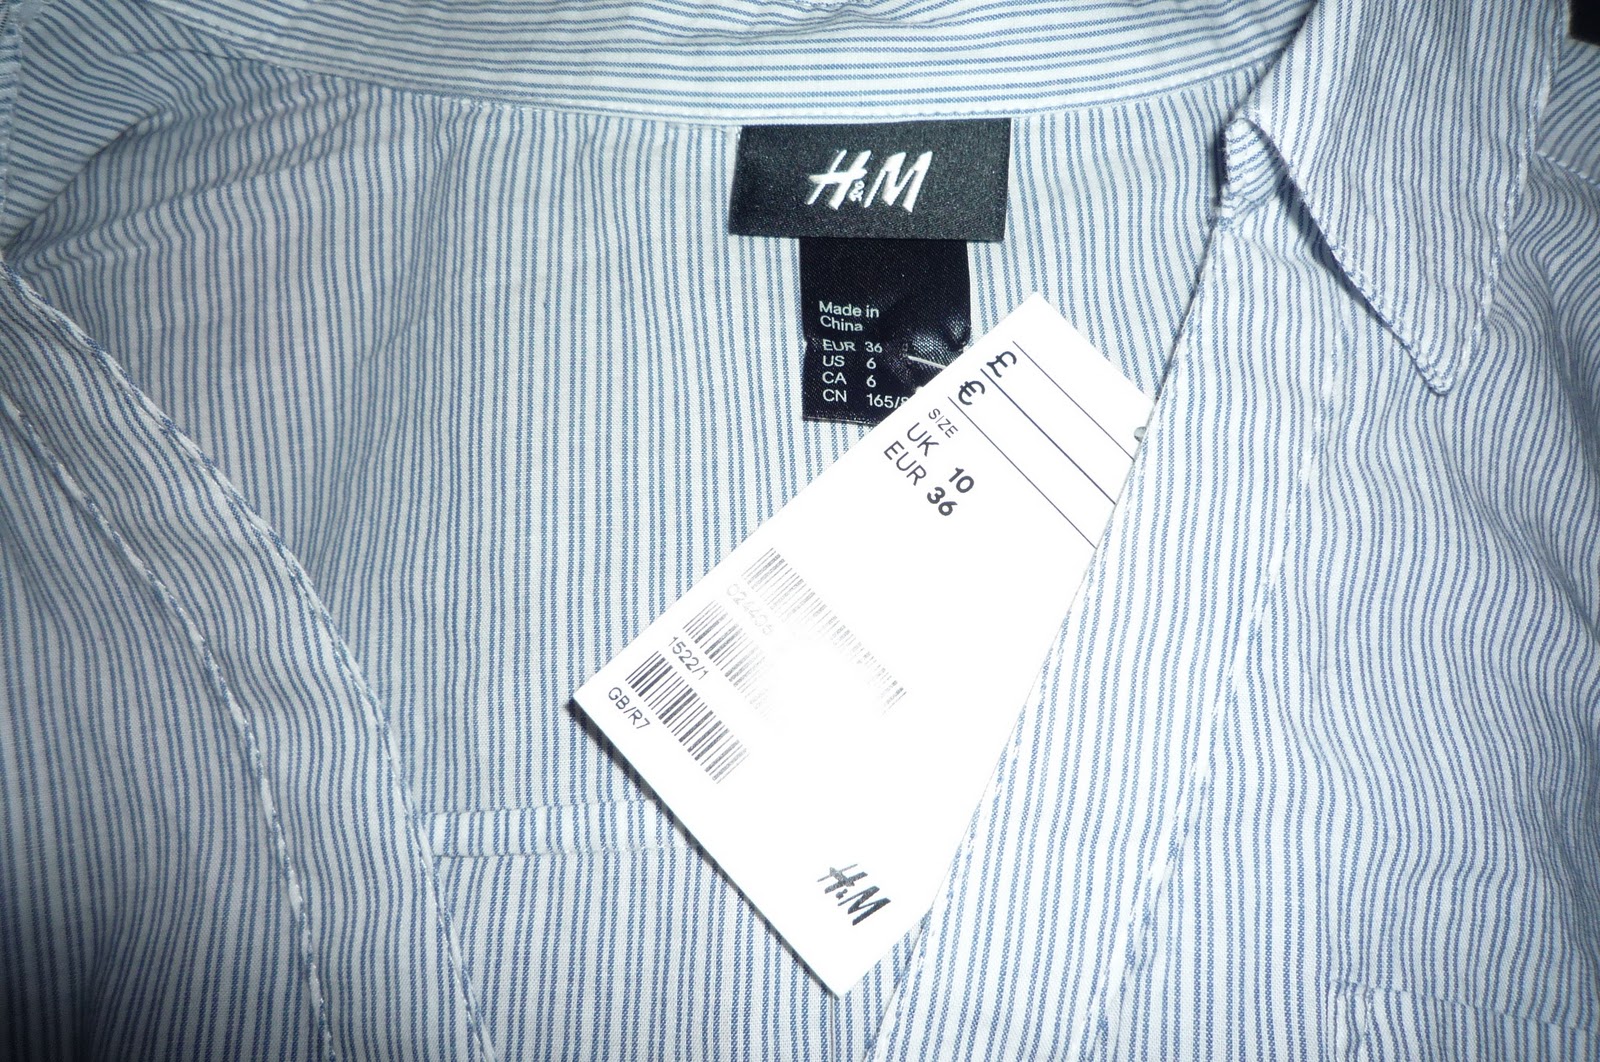 h and m dress shirt